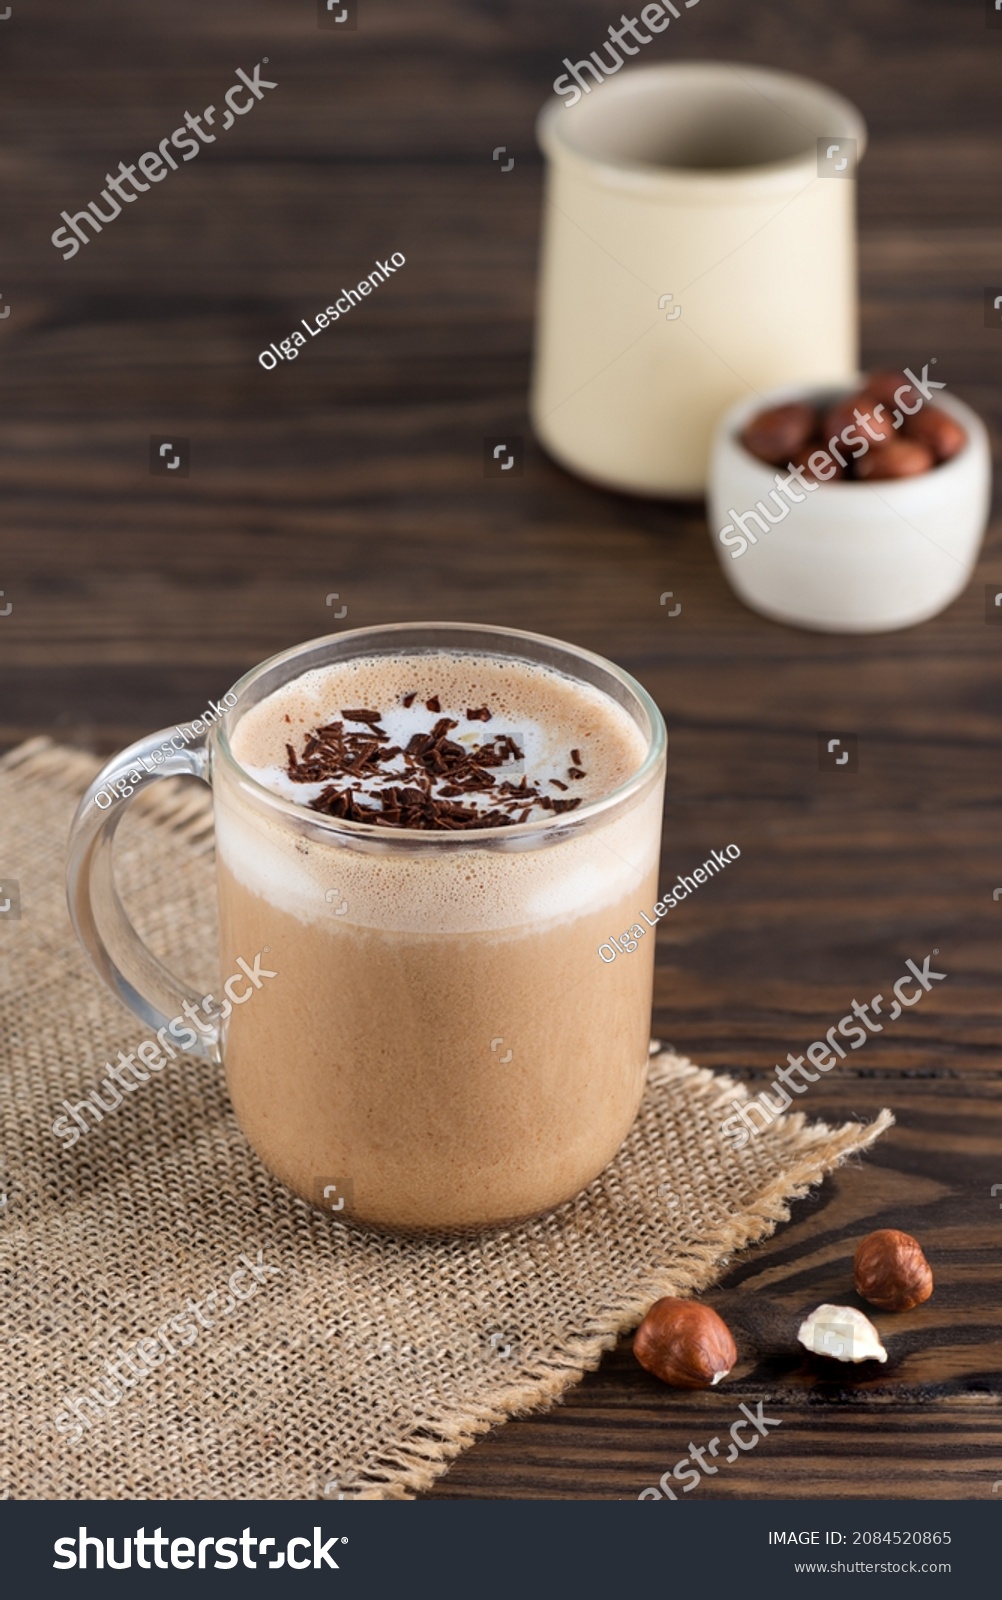 Hazelnut moсacсino coffee in a glass mug on a wooden table. #2084520865